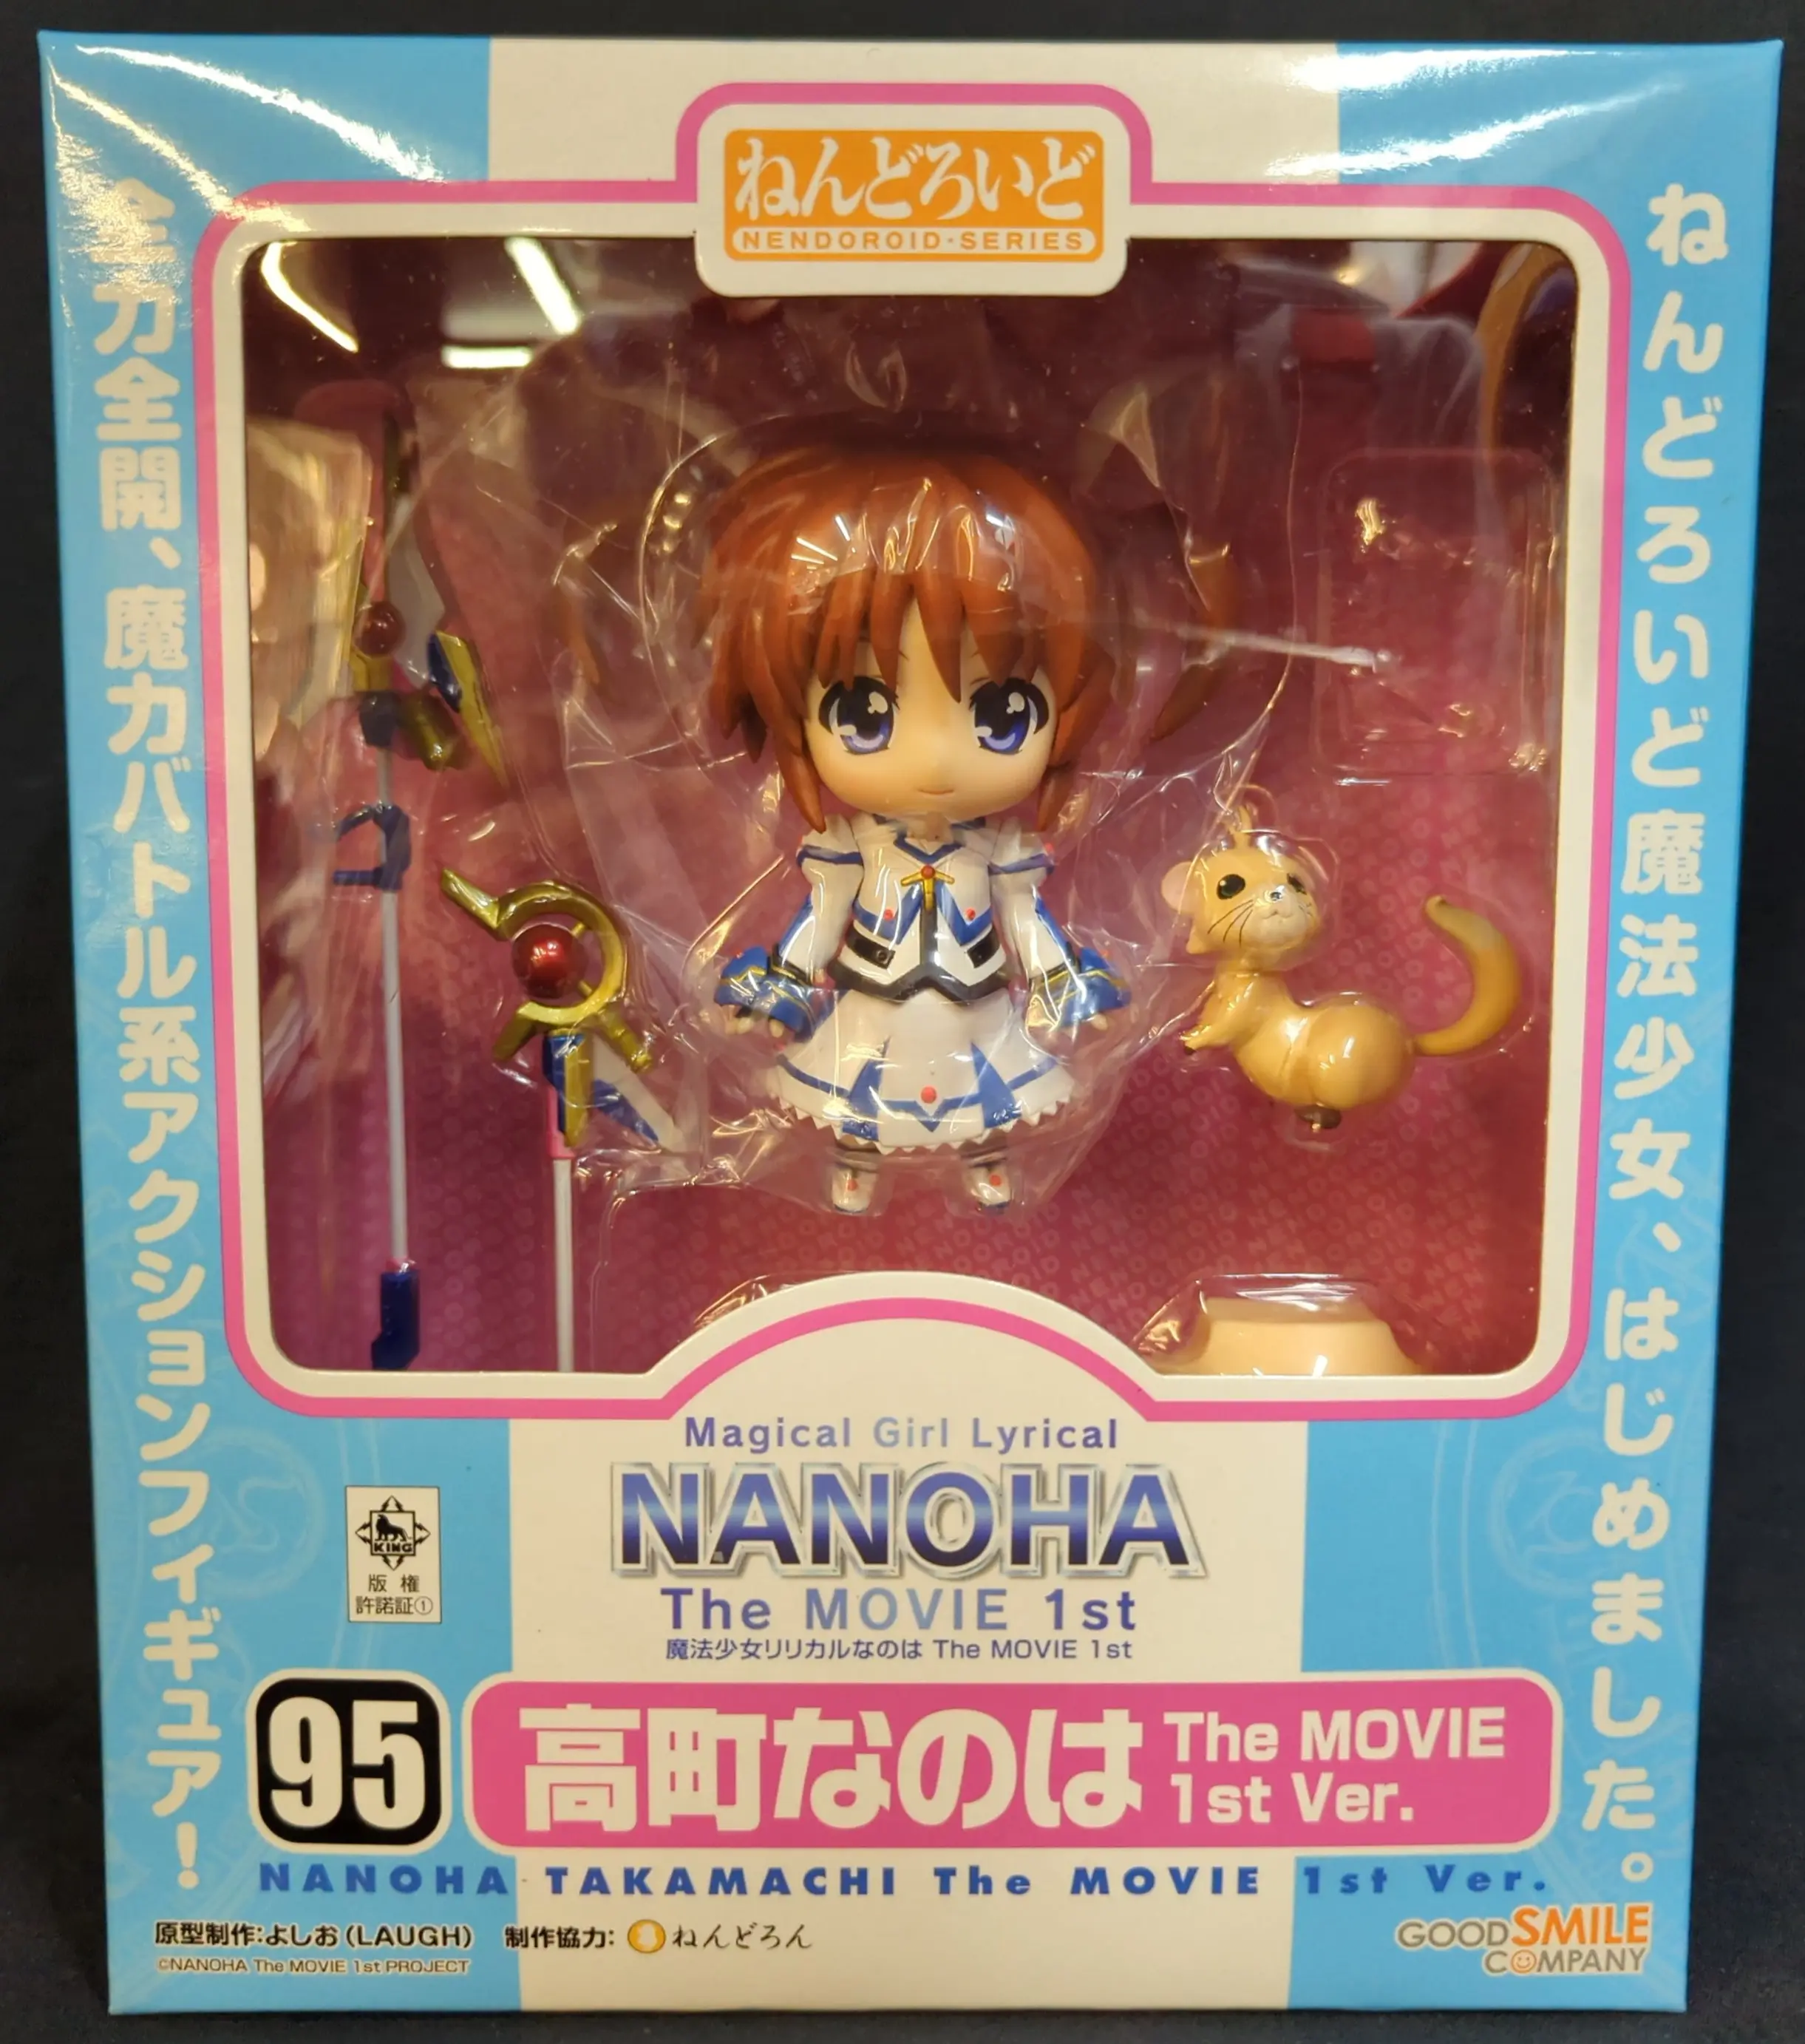 Nendoroid - Mahou Shoujo Lyrical Nanoha / Takamachi Nanoha